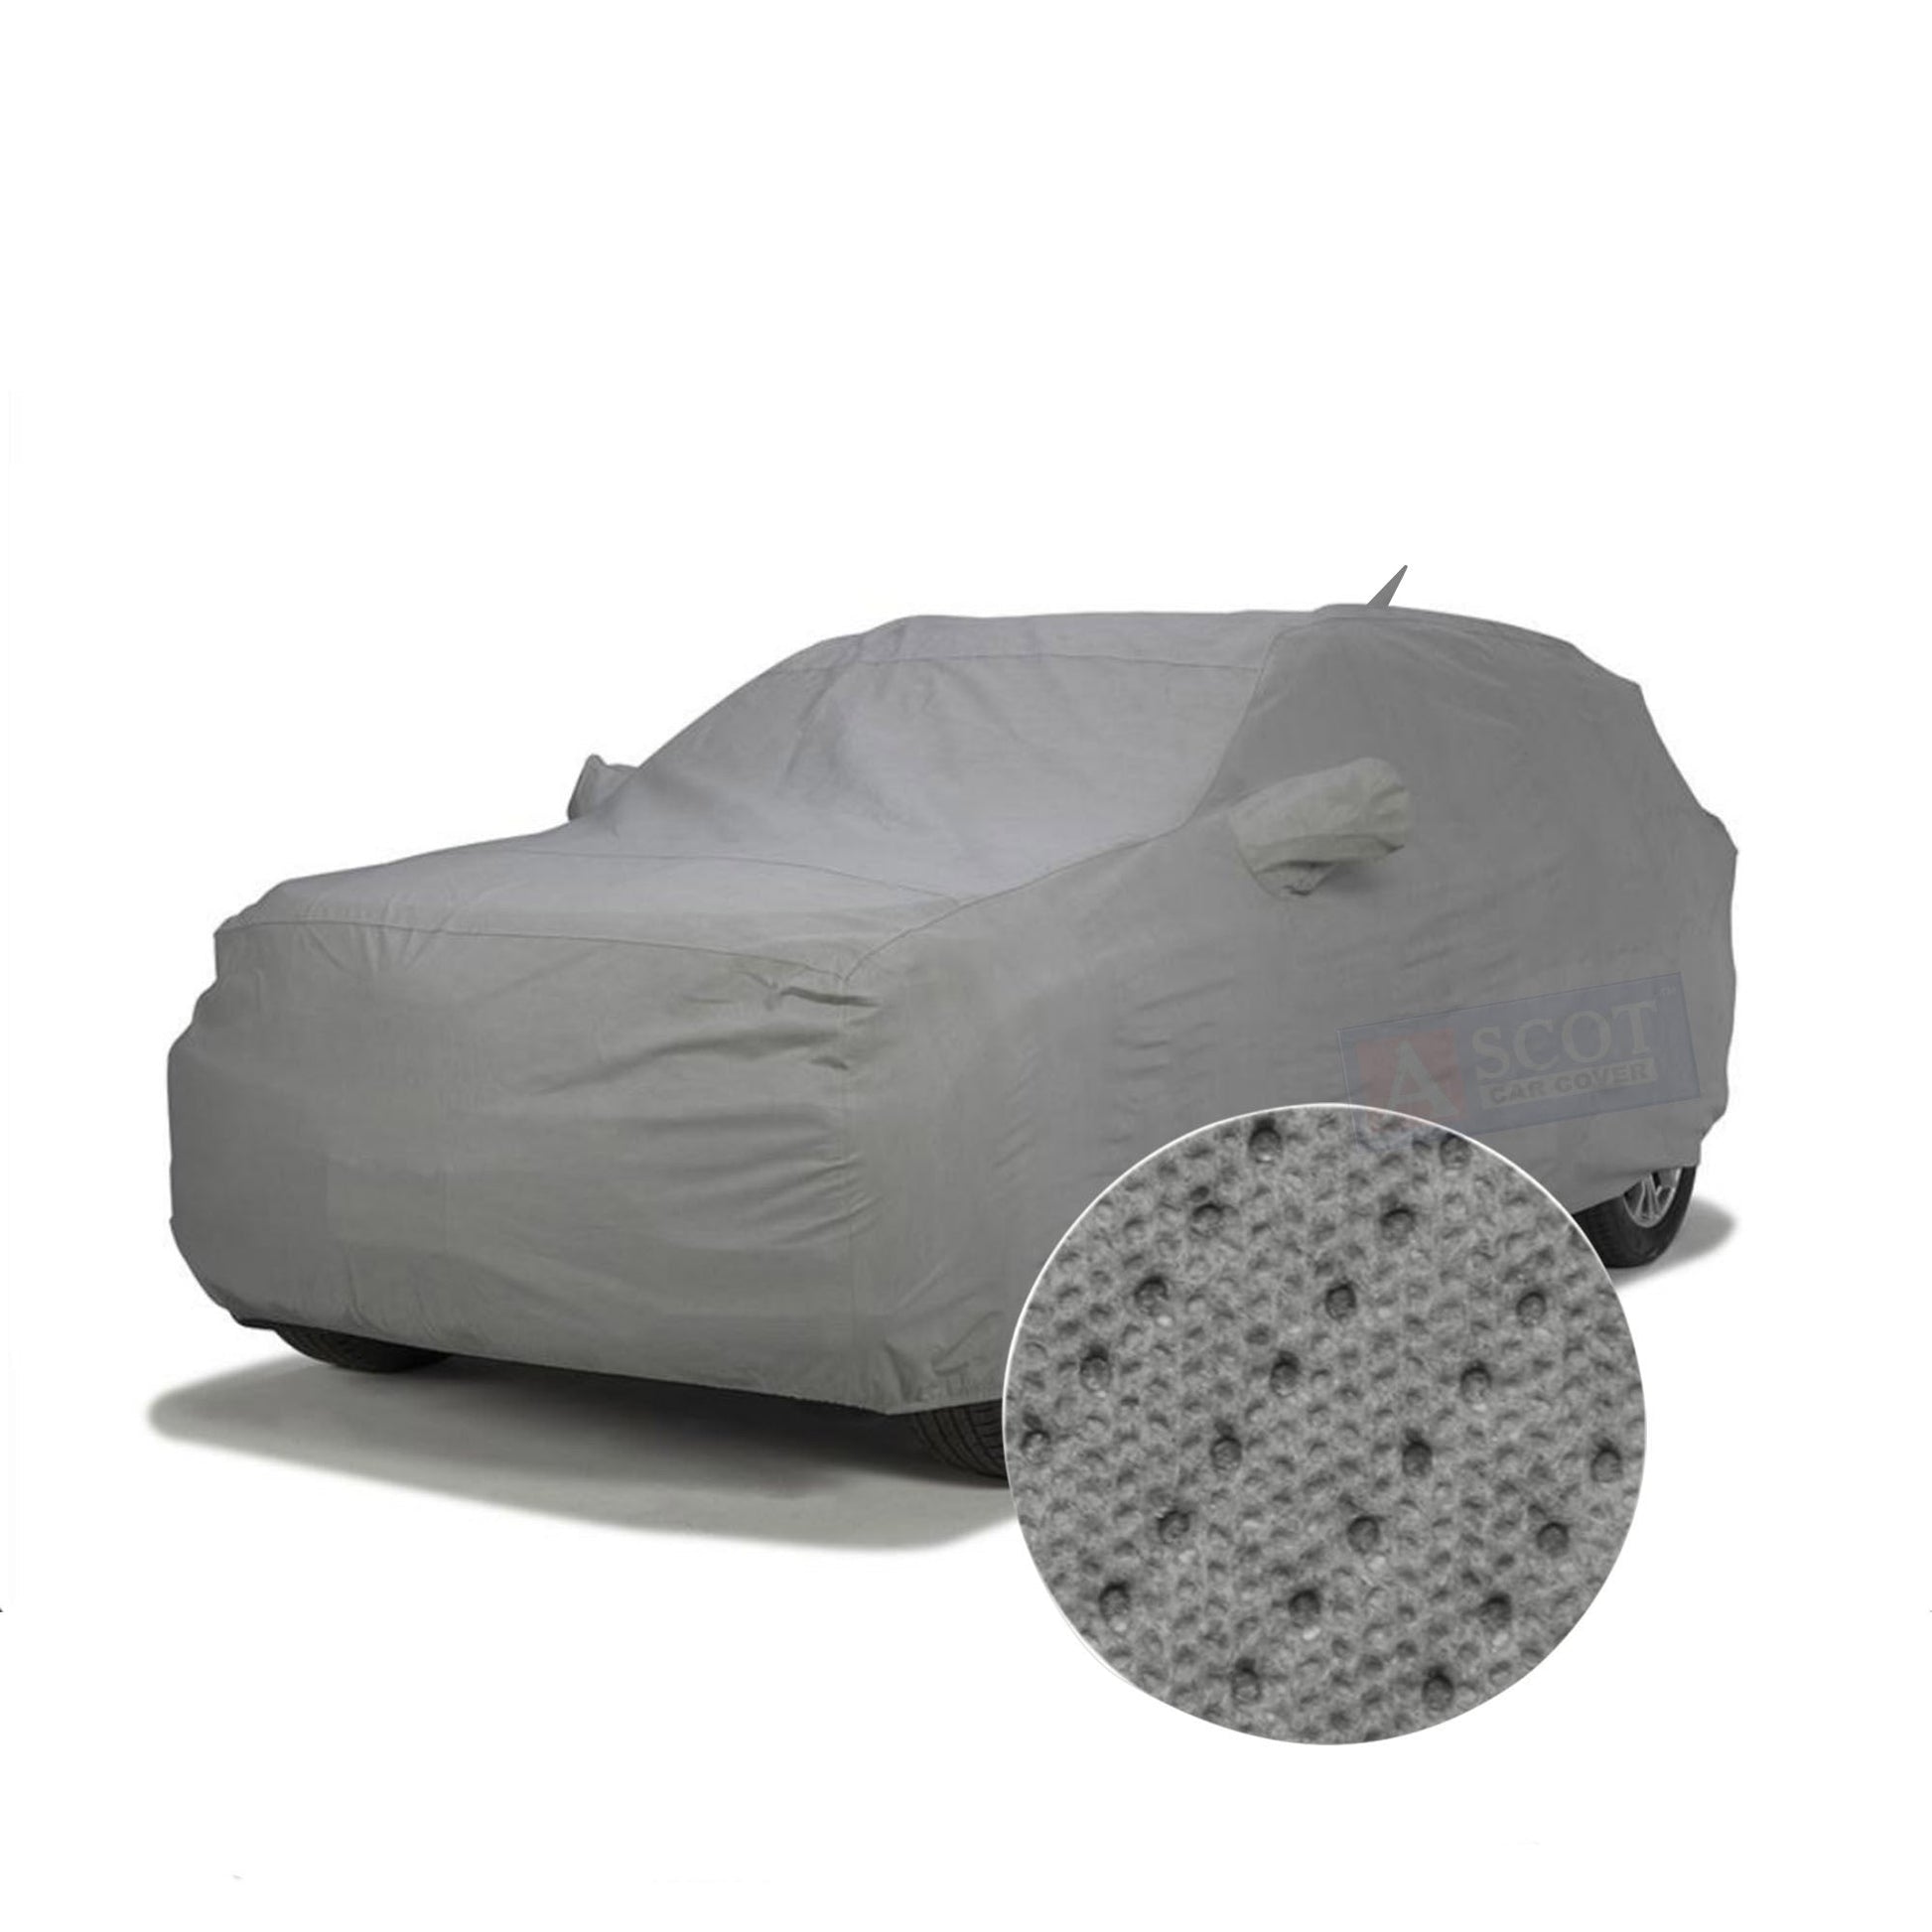  Waterproof Car Cover Compatible with Suzuki Aerio